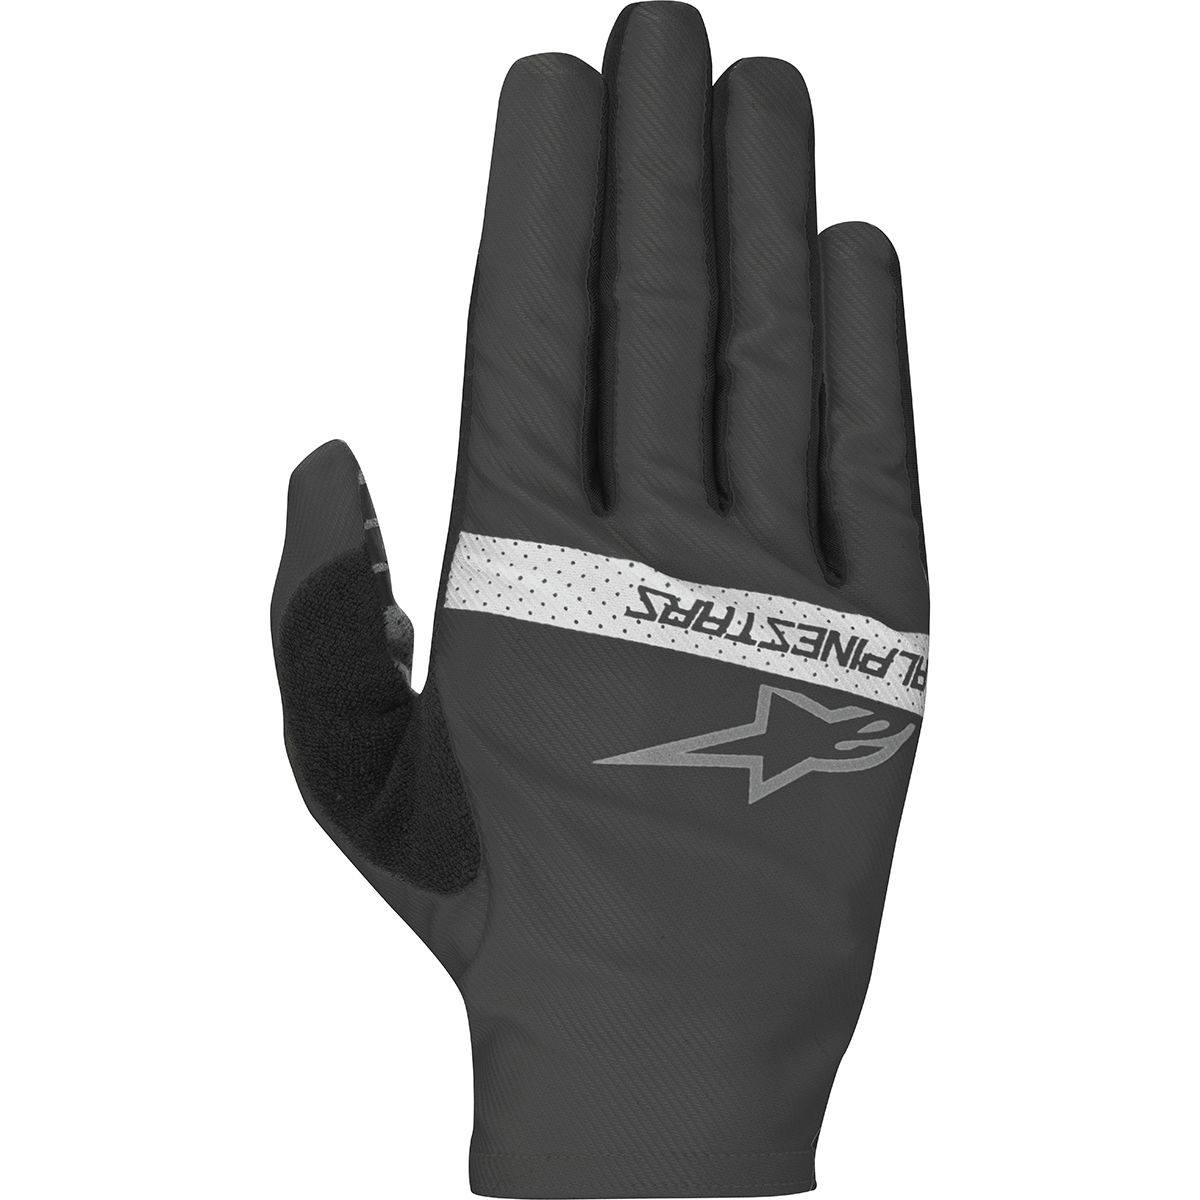 Alpinestars Aspen Pro Lite Glove - Men's